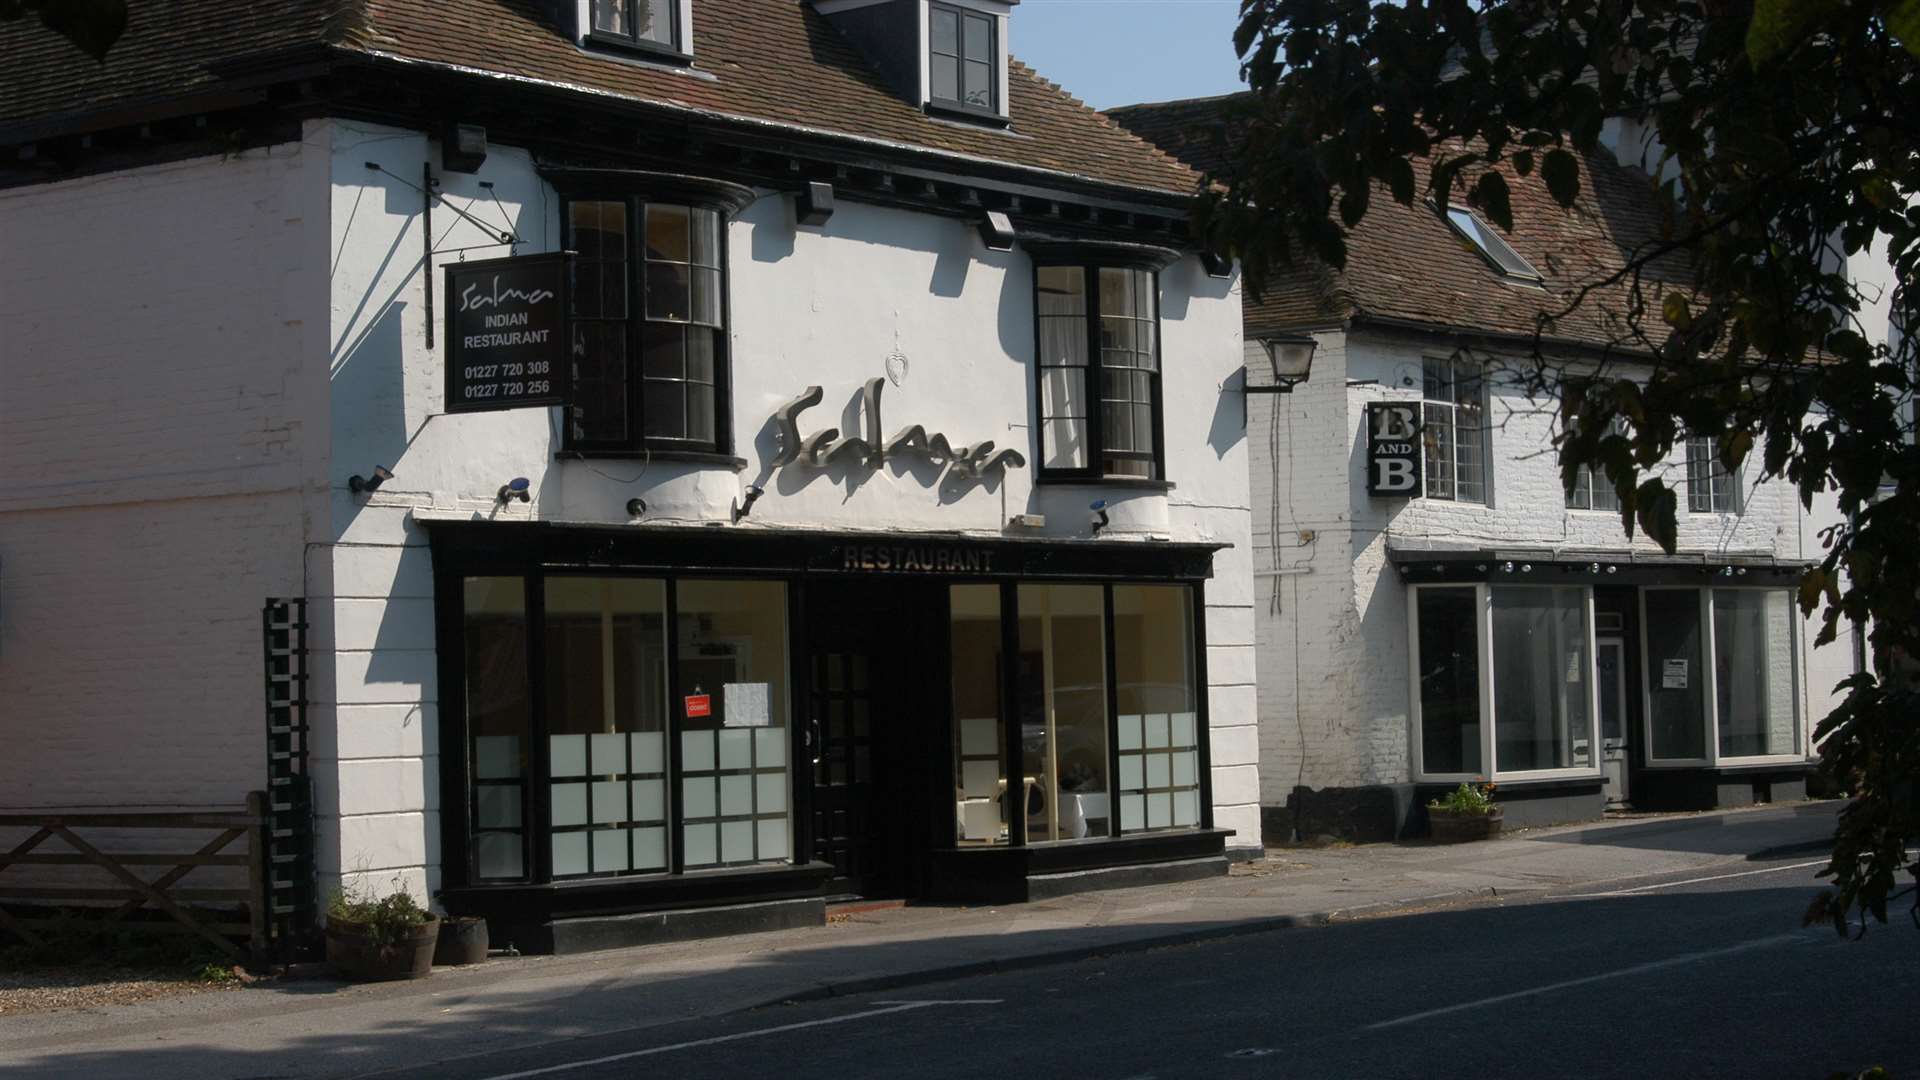 The Salma Indian Restaurant in Wingham